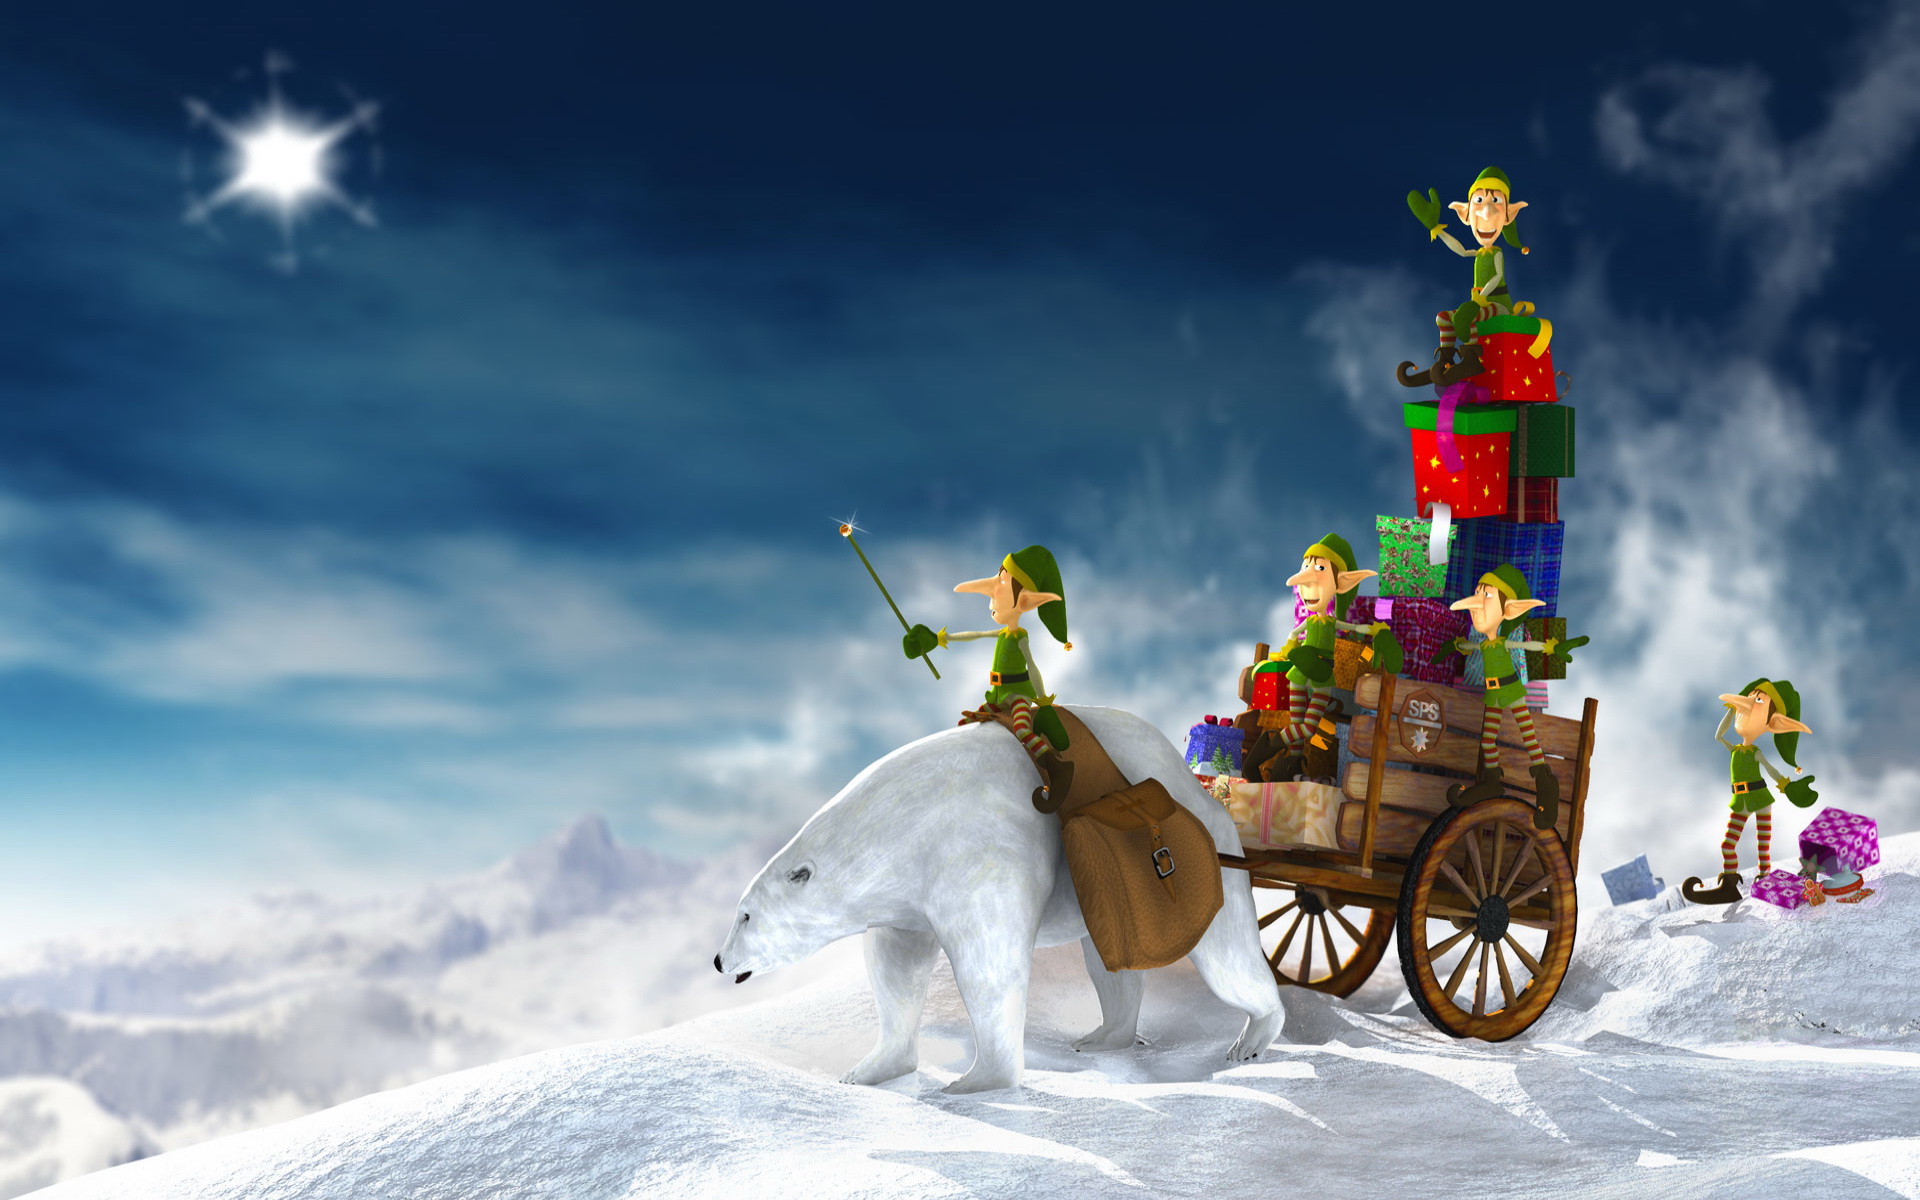 Christmas Wallpaper 3d Downloads 48917 Desktop Wallpapers | Top ...